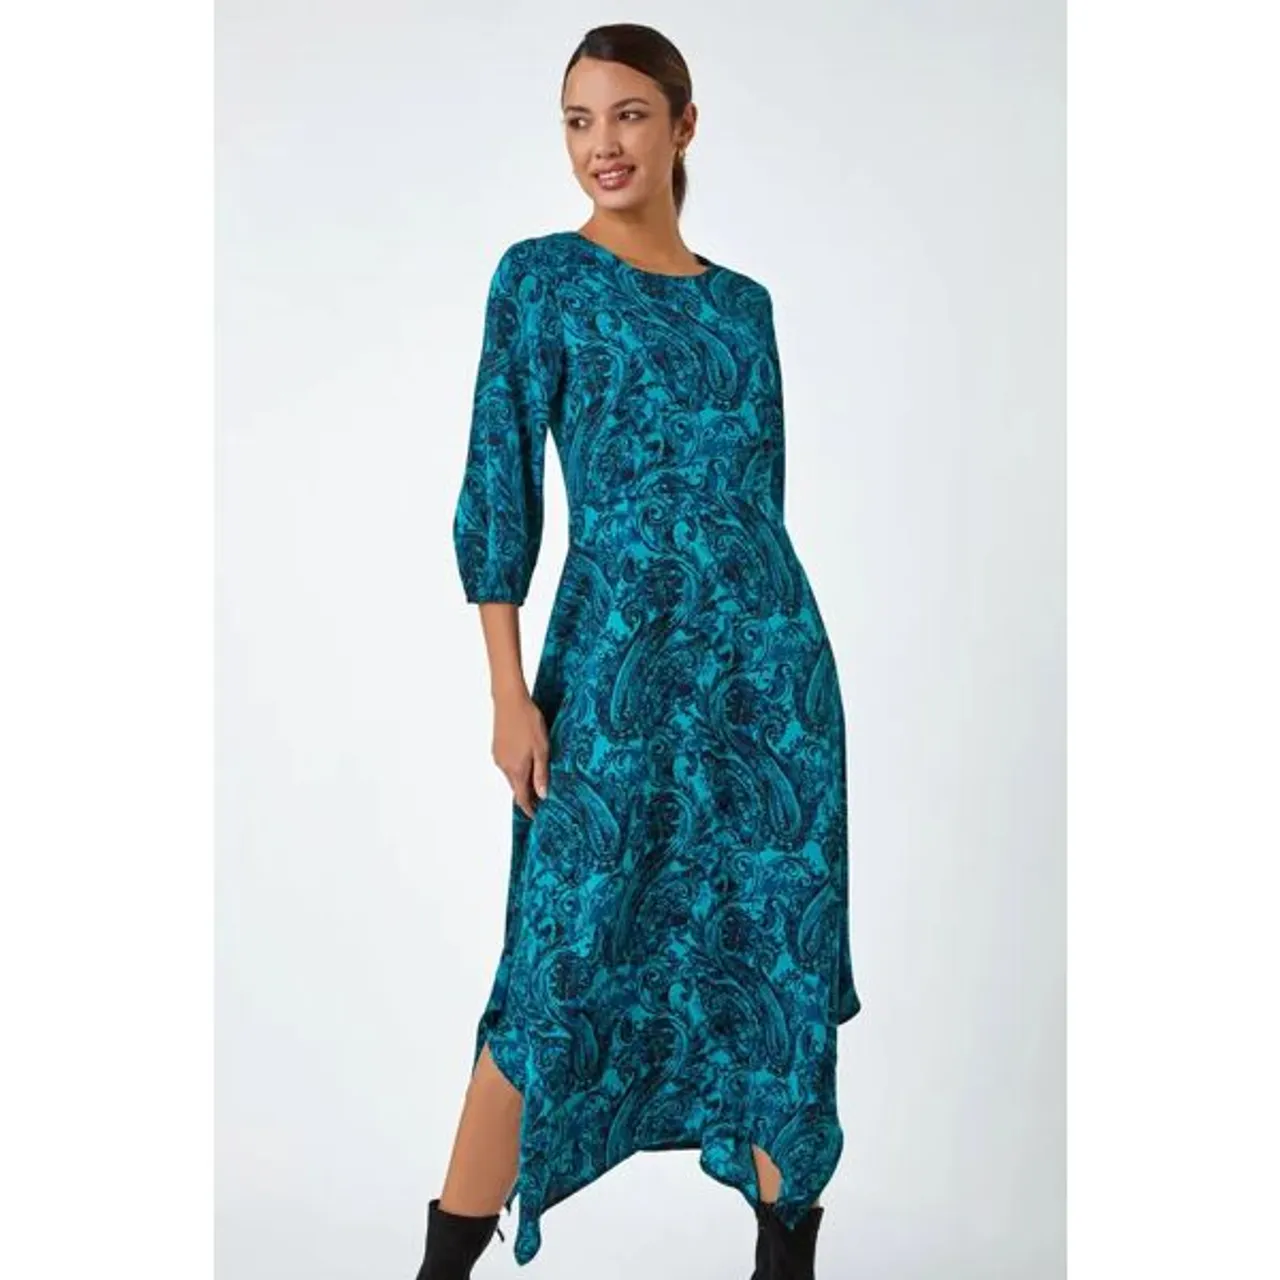 Roman Paisley Print Hanky Hem Midi Dress in Teal - Size 10 10 female